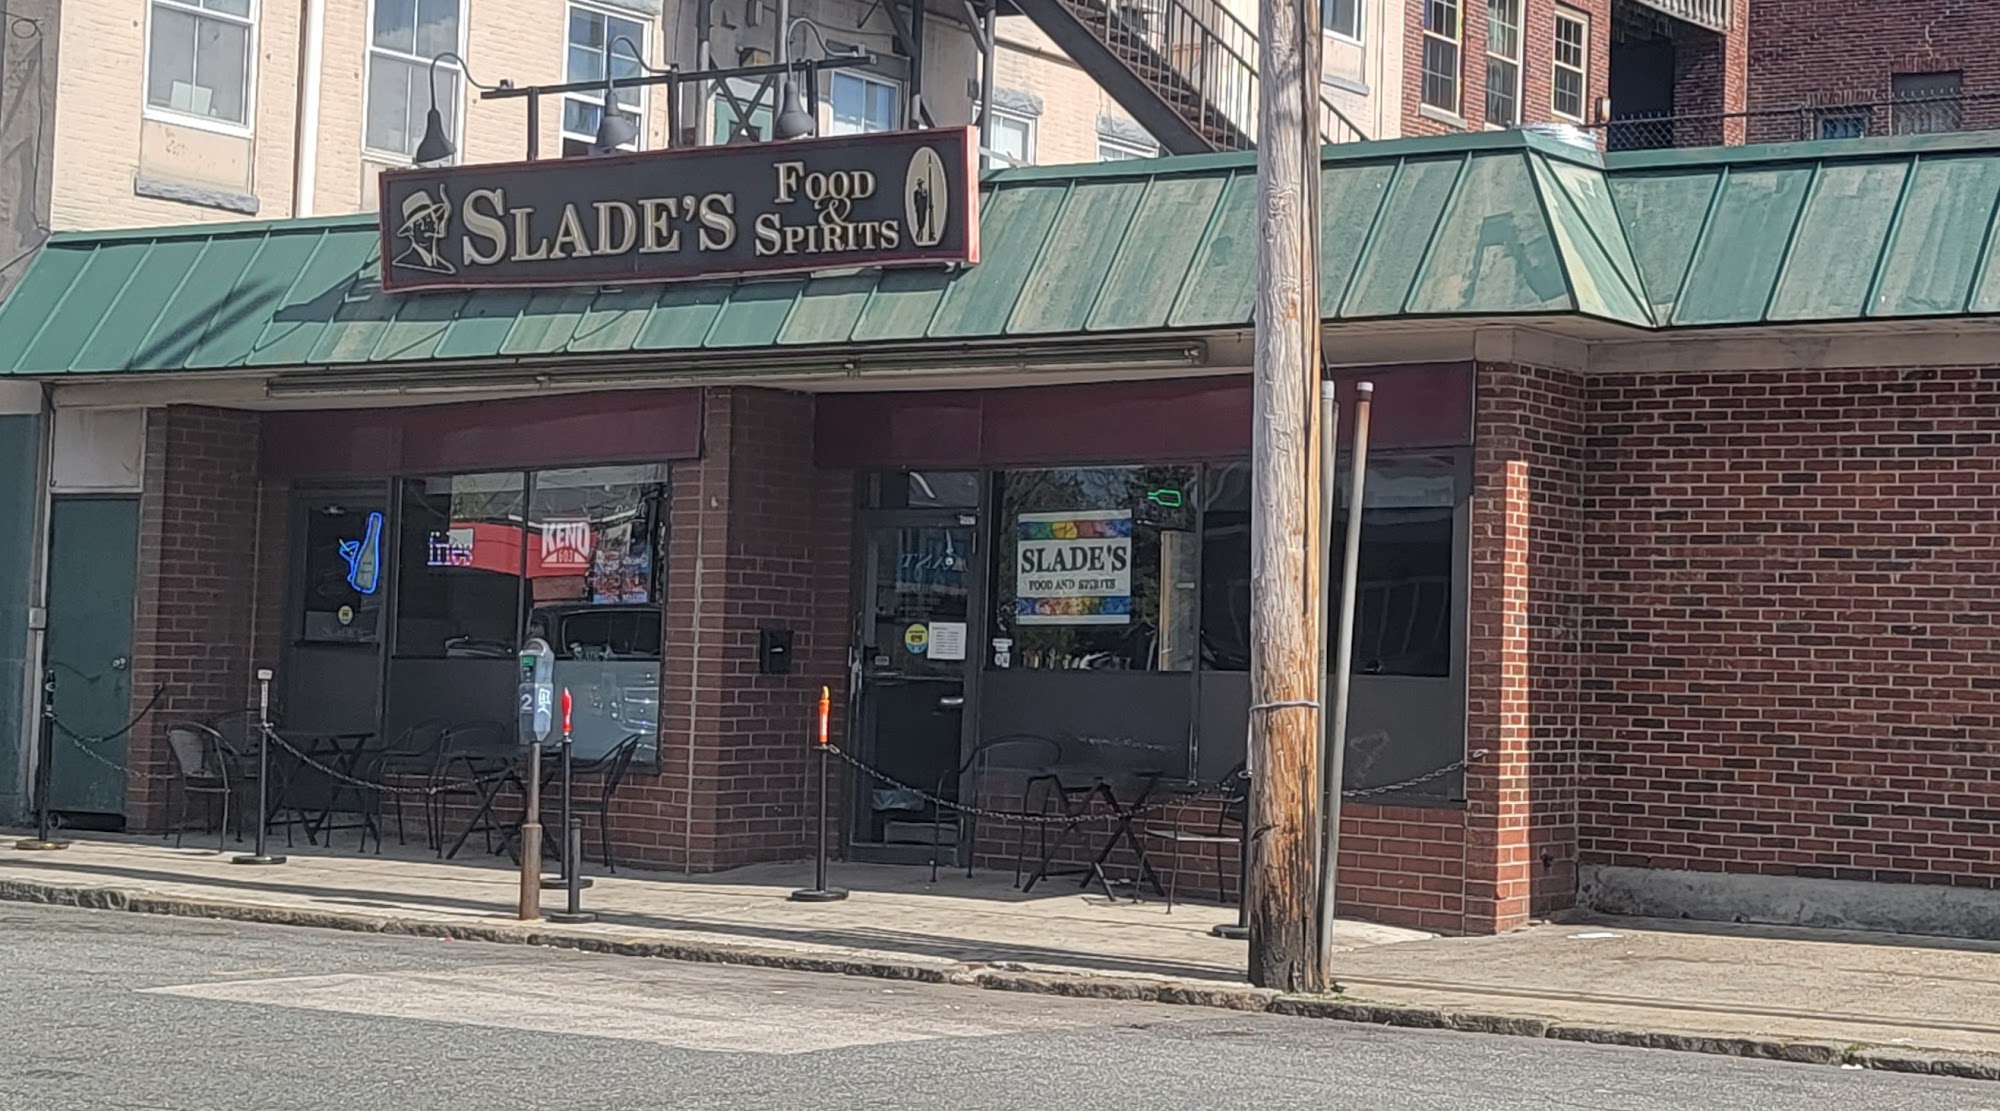 Slade's Food & Spirits